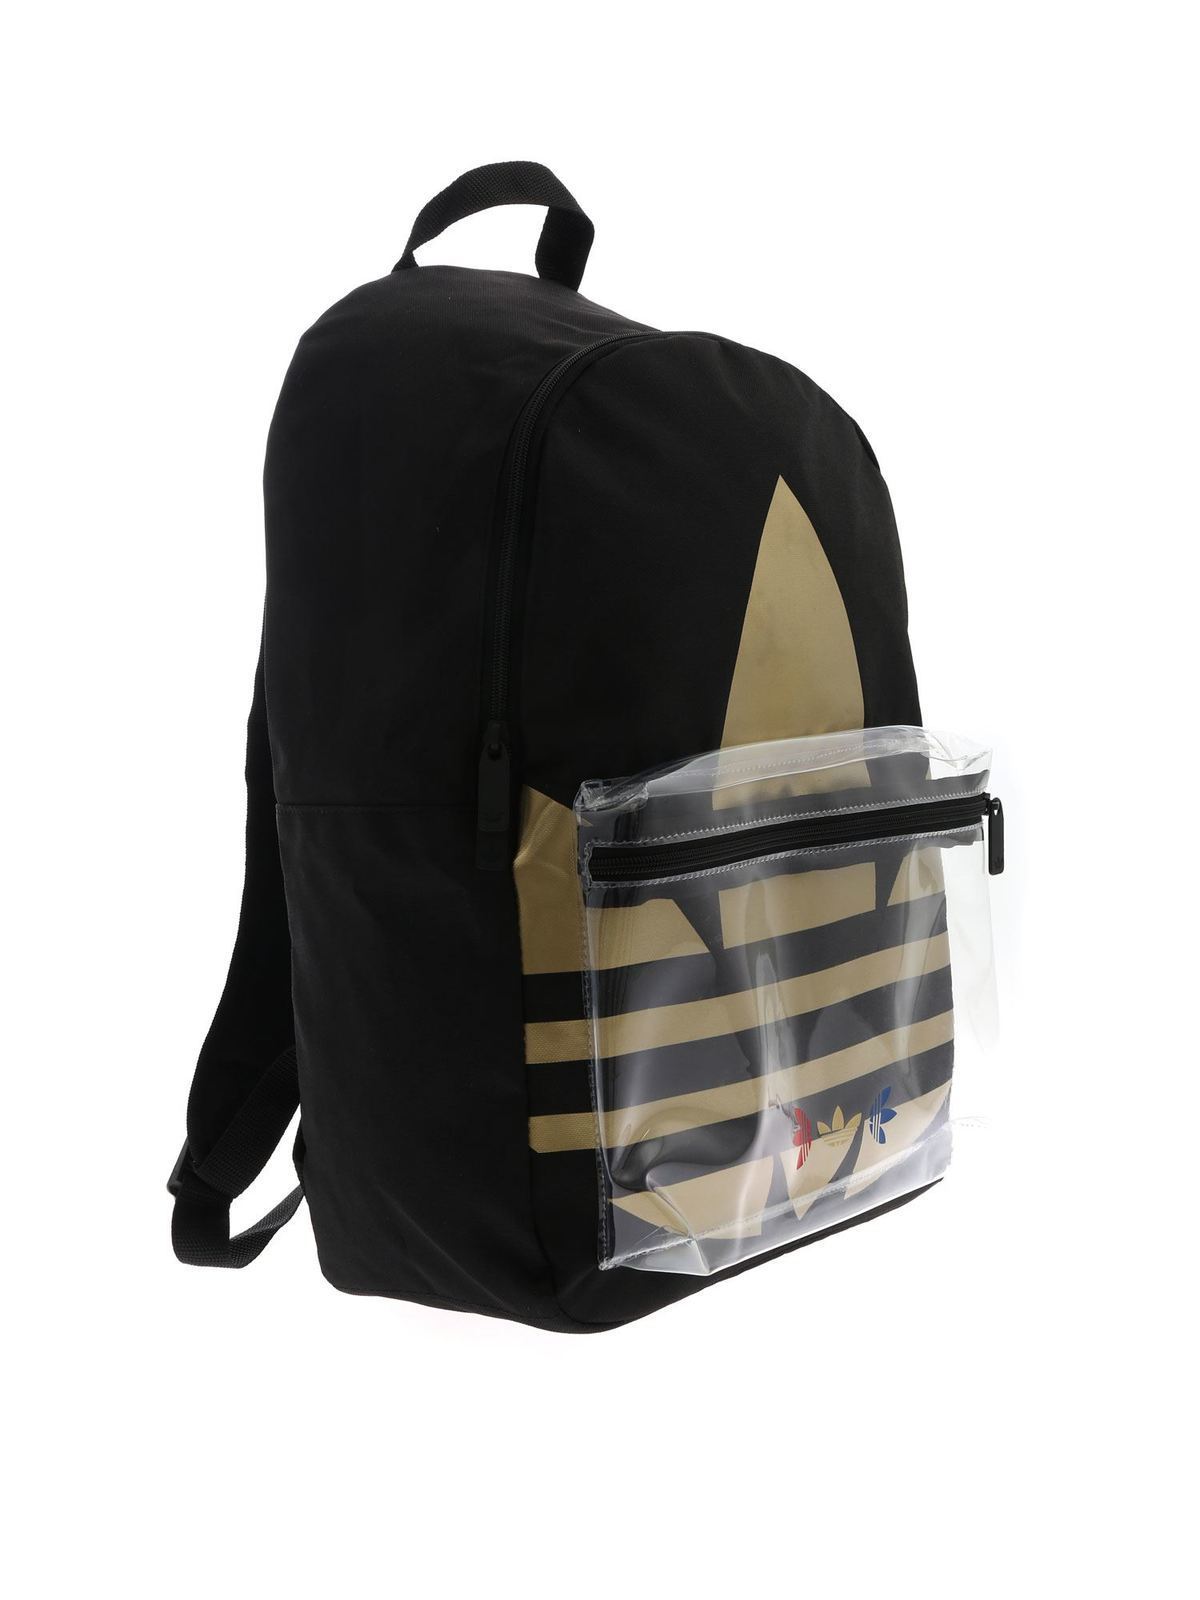 Adidas Originals - Trefoil backpack in 